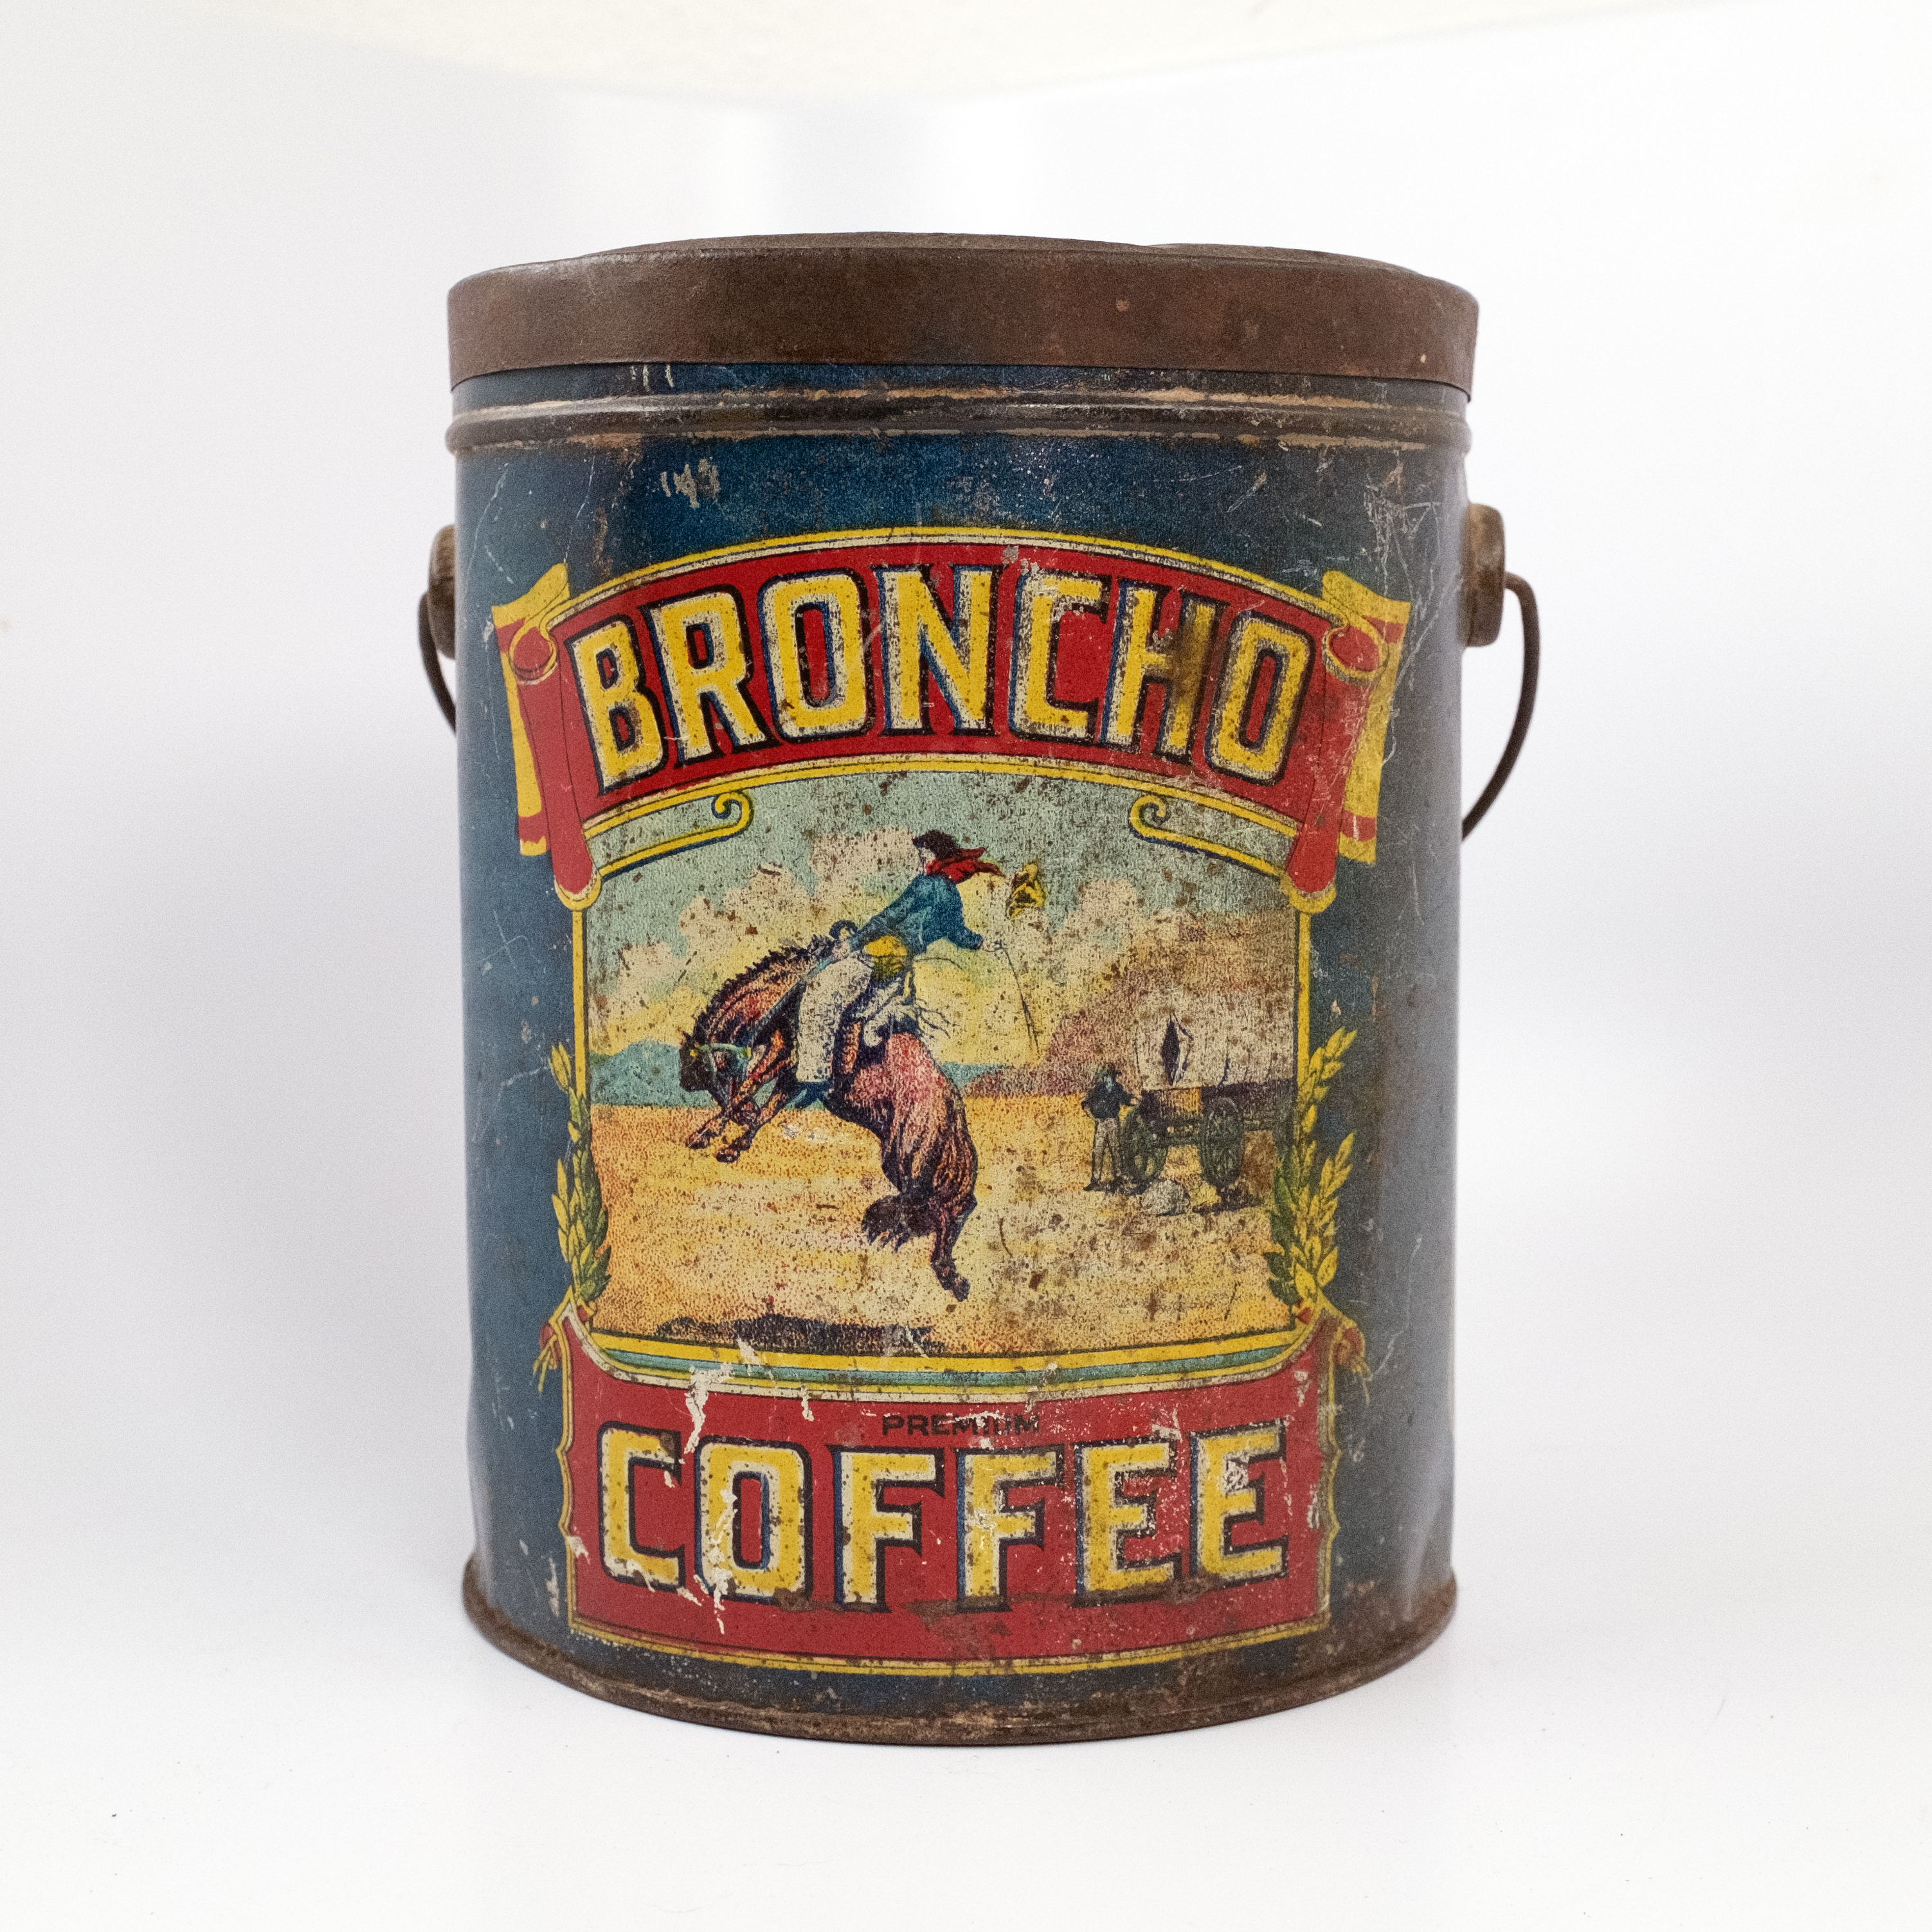 Broncho Coffee Tin Front